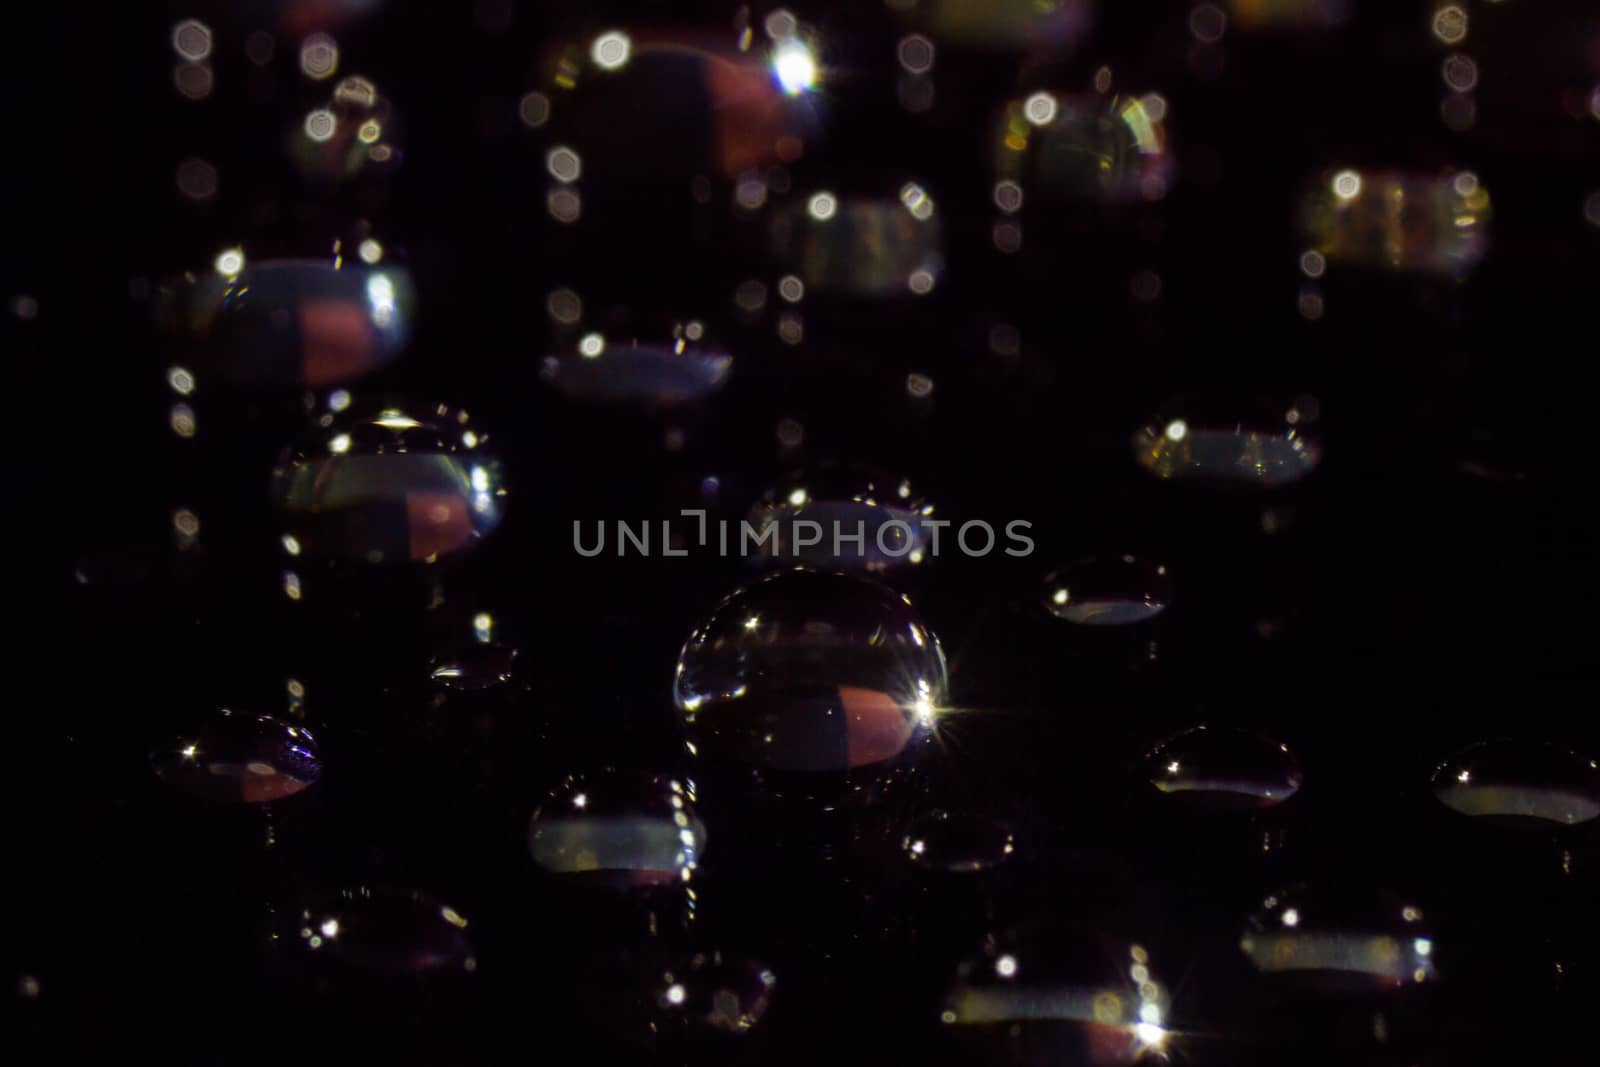 Abstract Waterdrops Closeup Background by levonarakelian